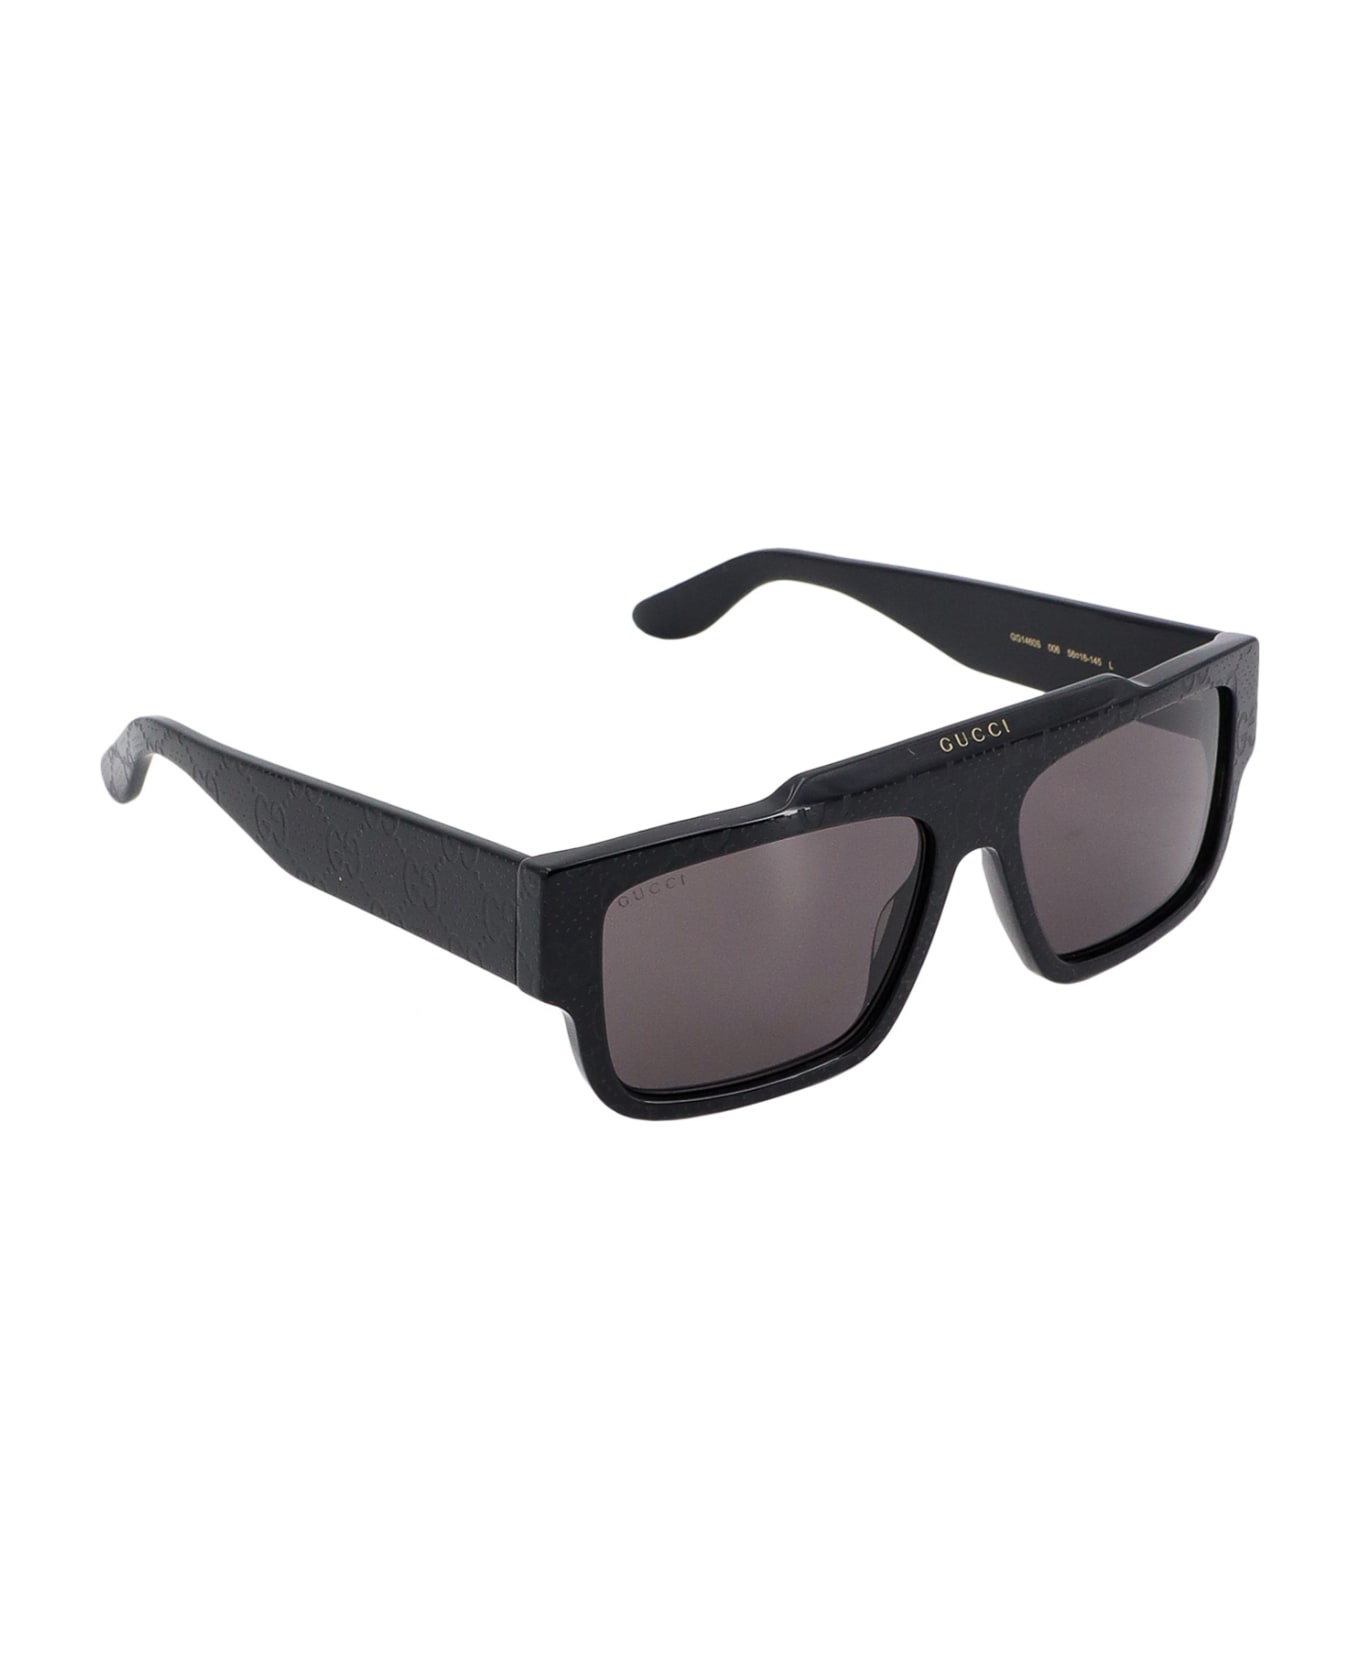 Gucci Sunglasses - Black サングラス